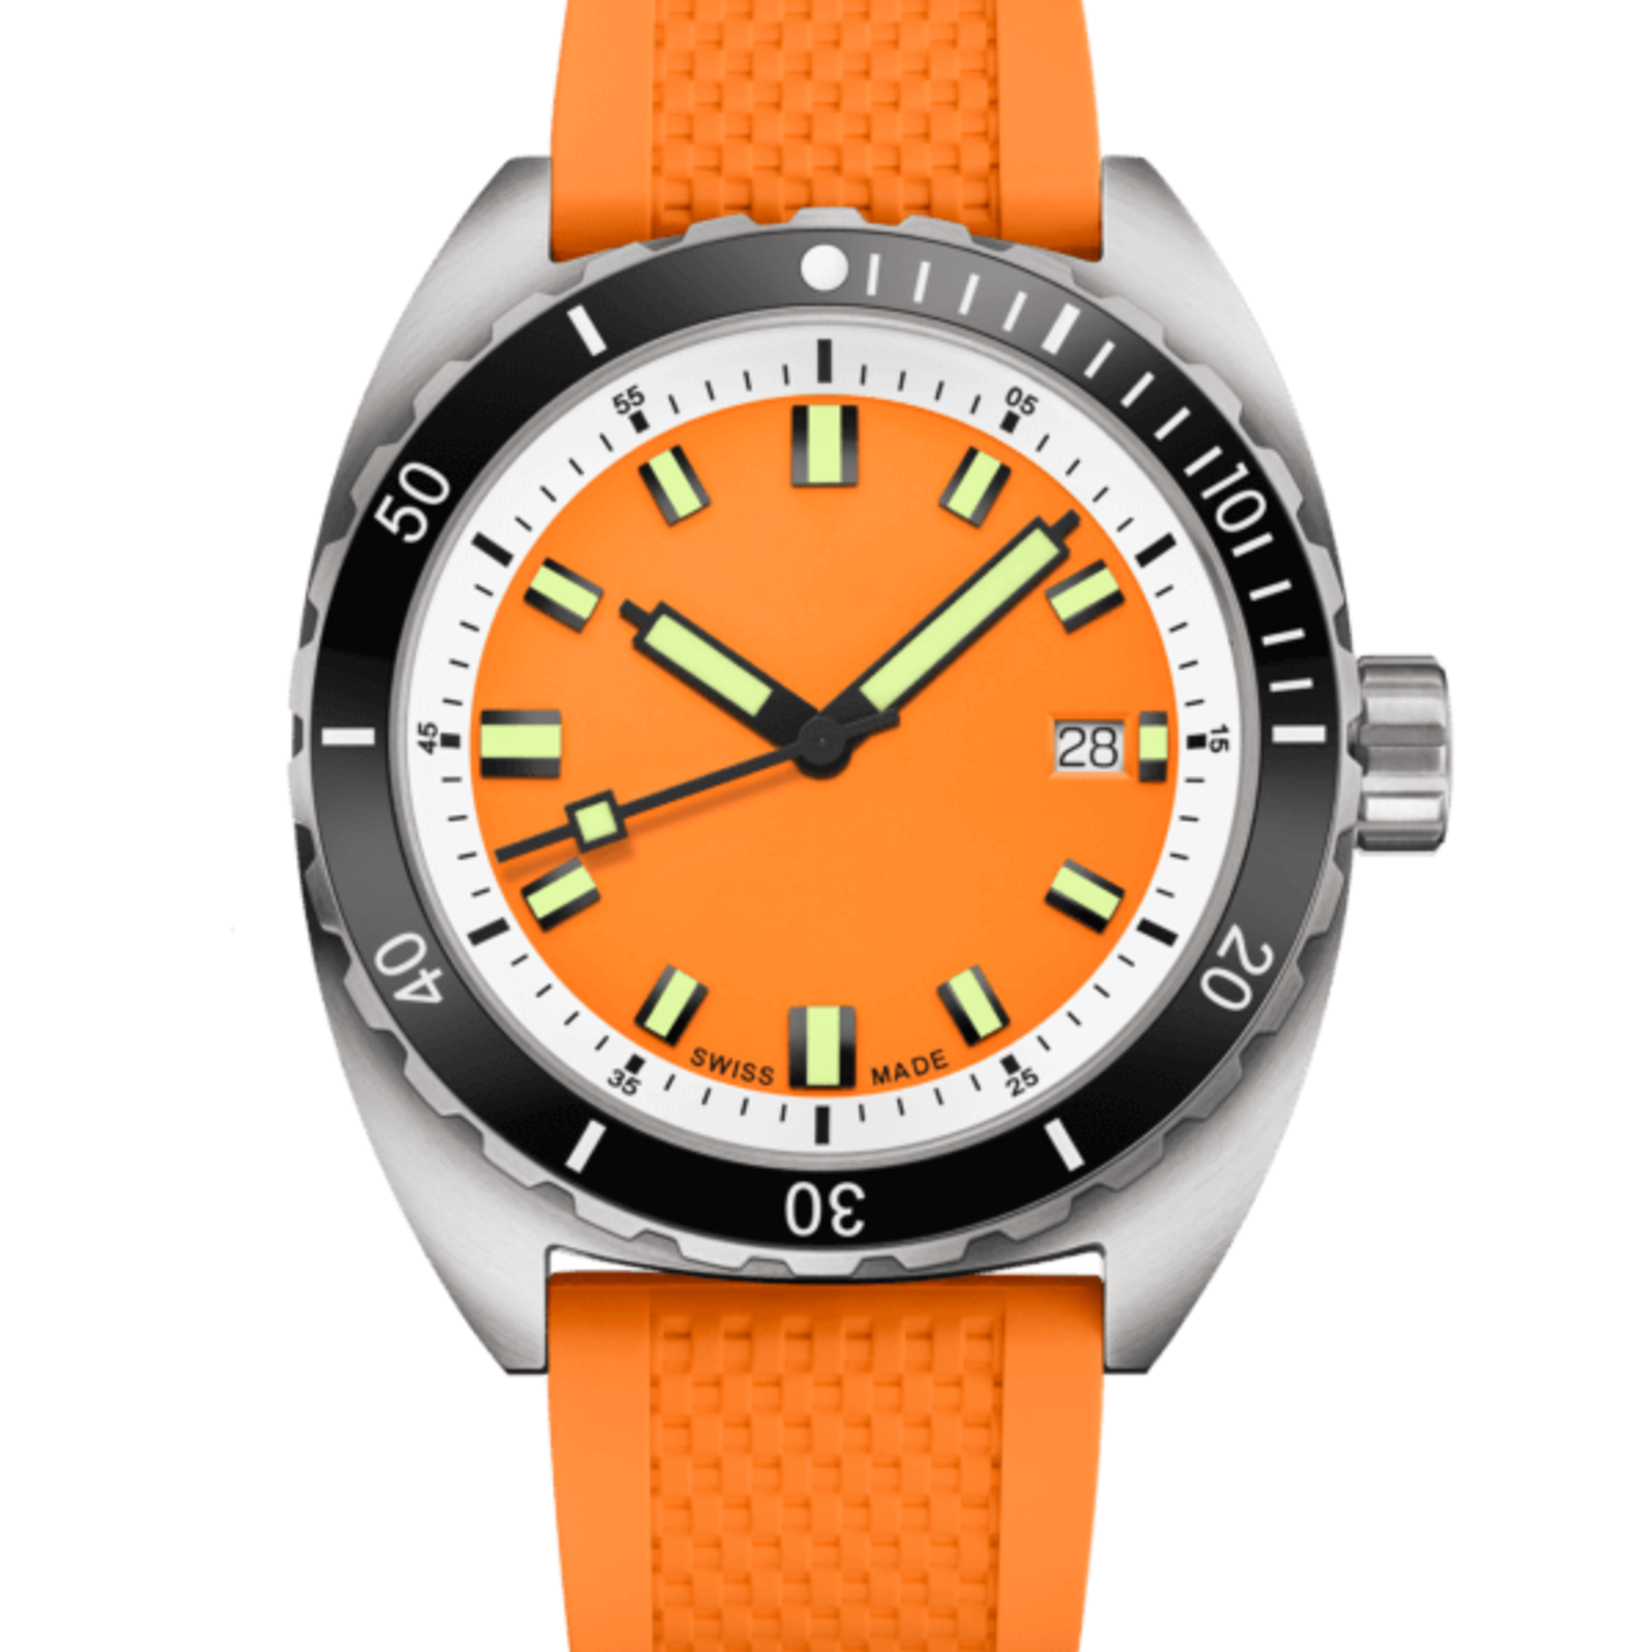 AWC AWC Deep Sea Titanium - 300 Automatic 3 Hand Watch Orange & White